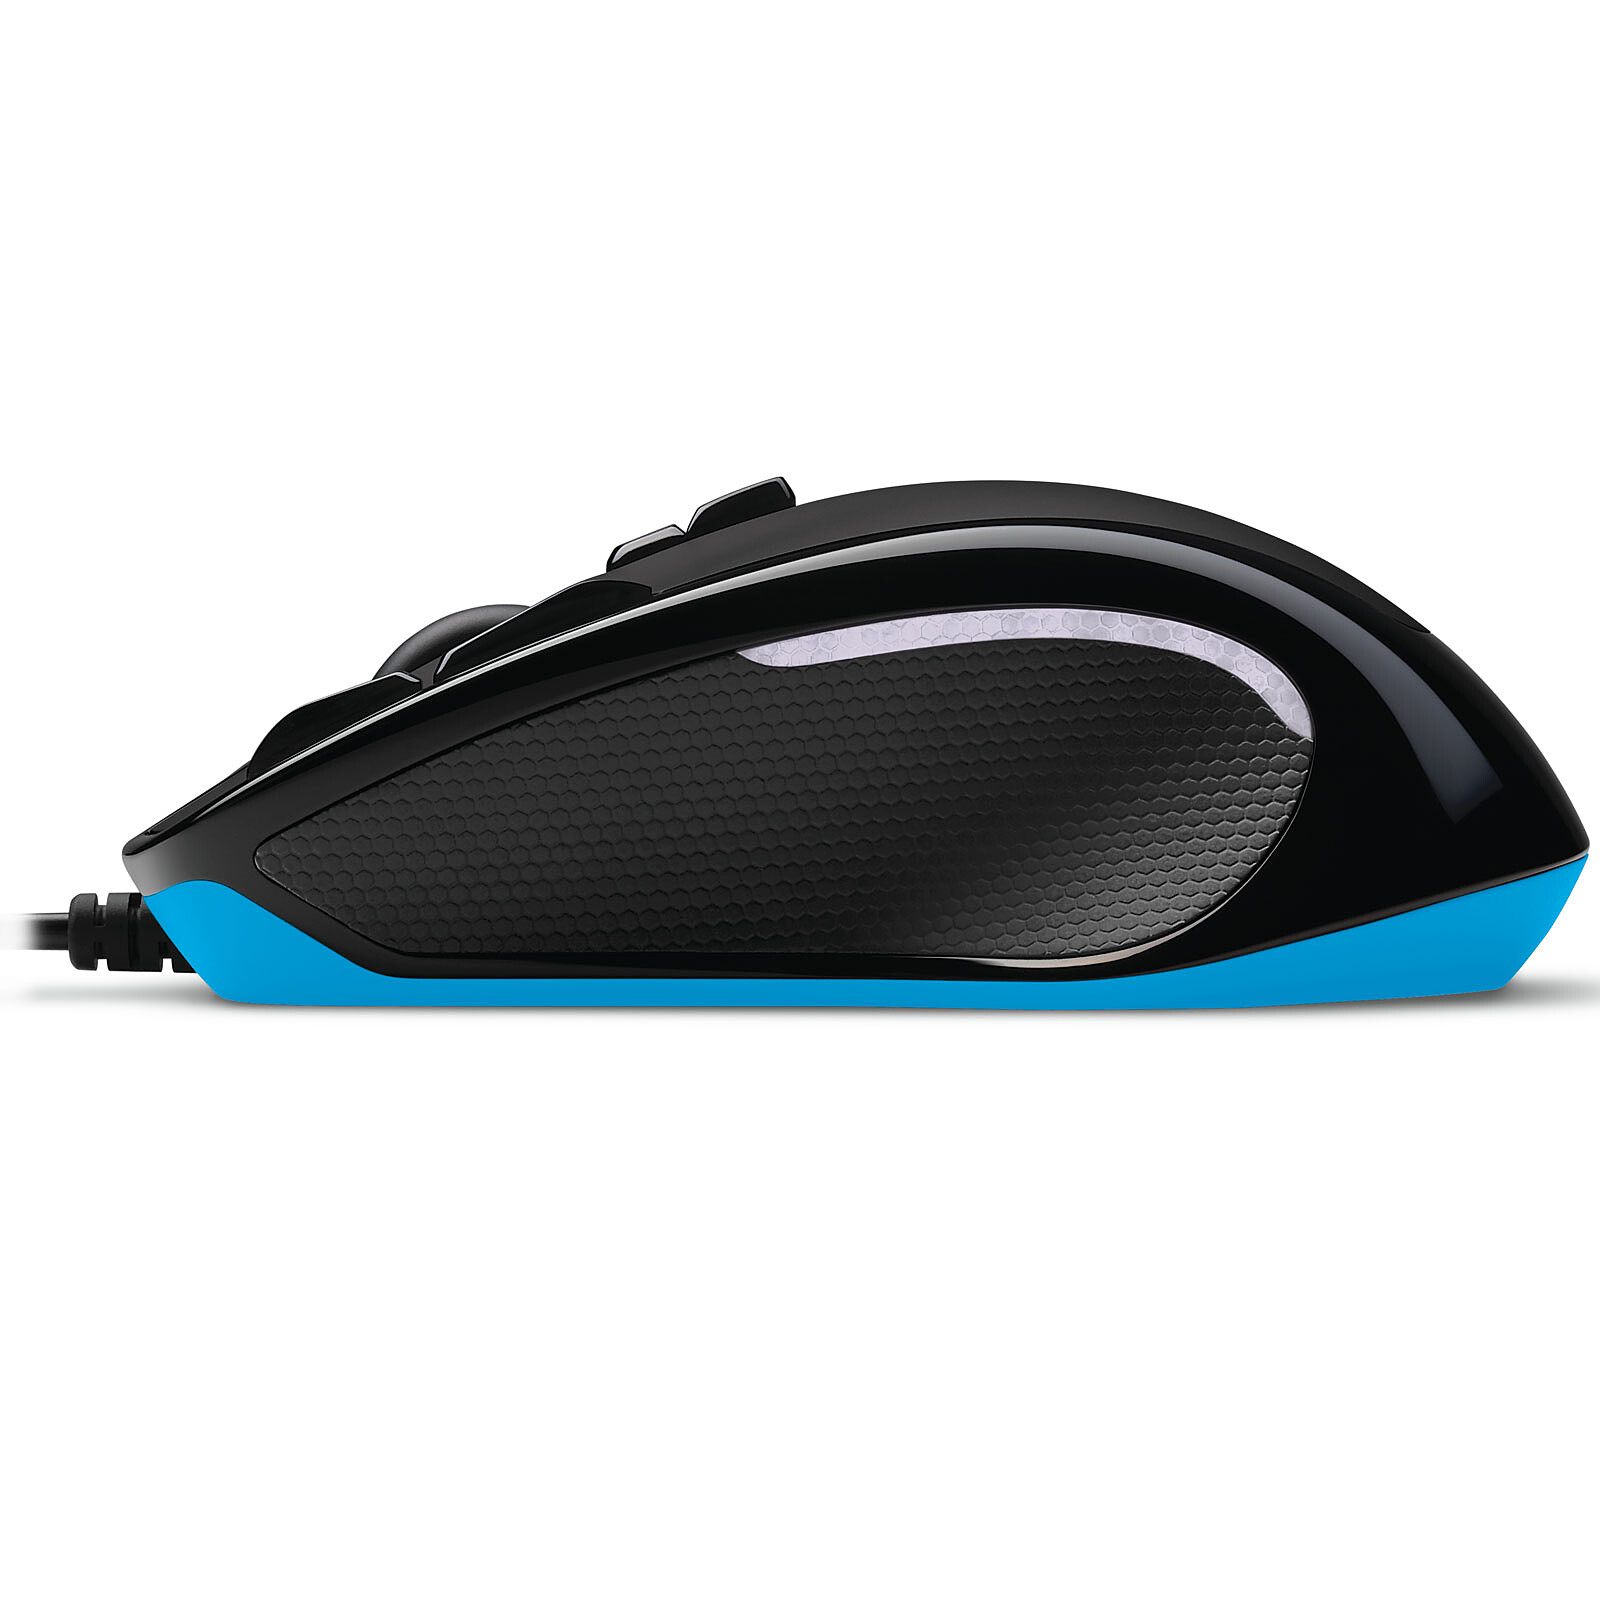 Logitech Gaming Mouse G300s Mouse Logitech G On Ldlc